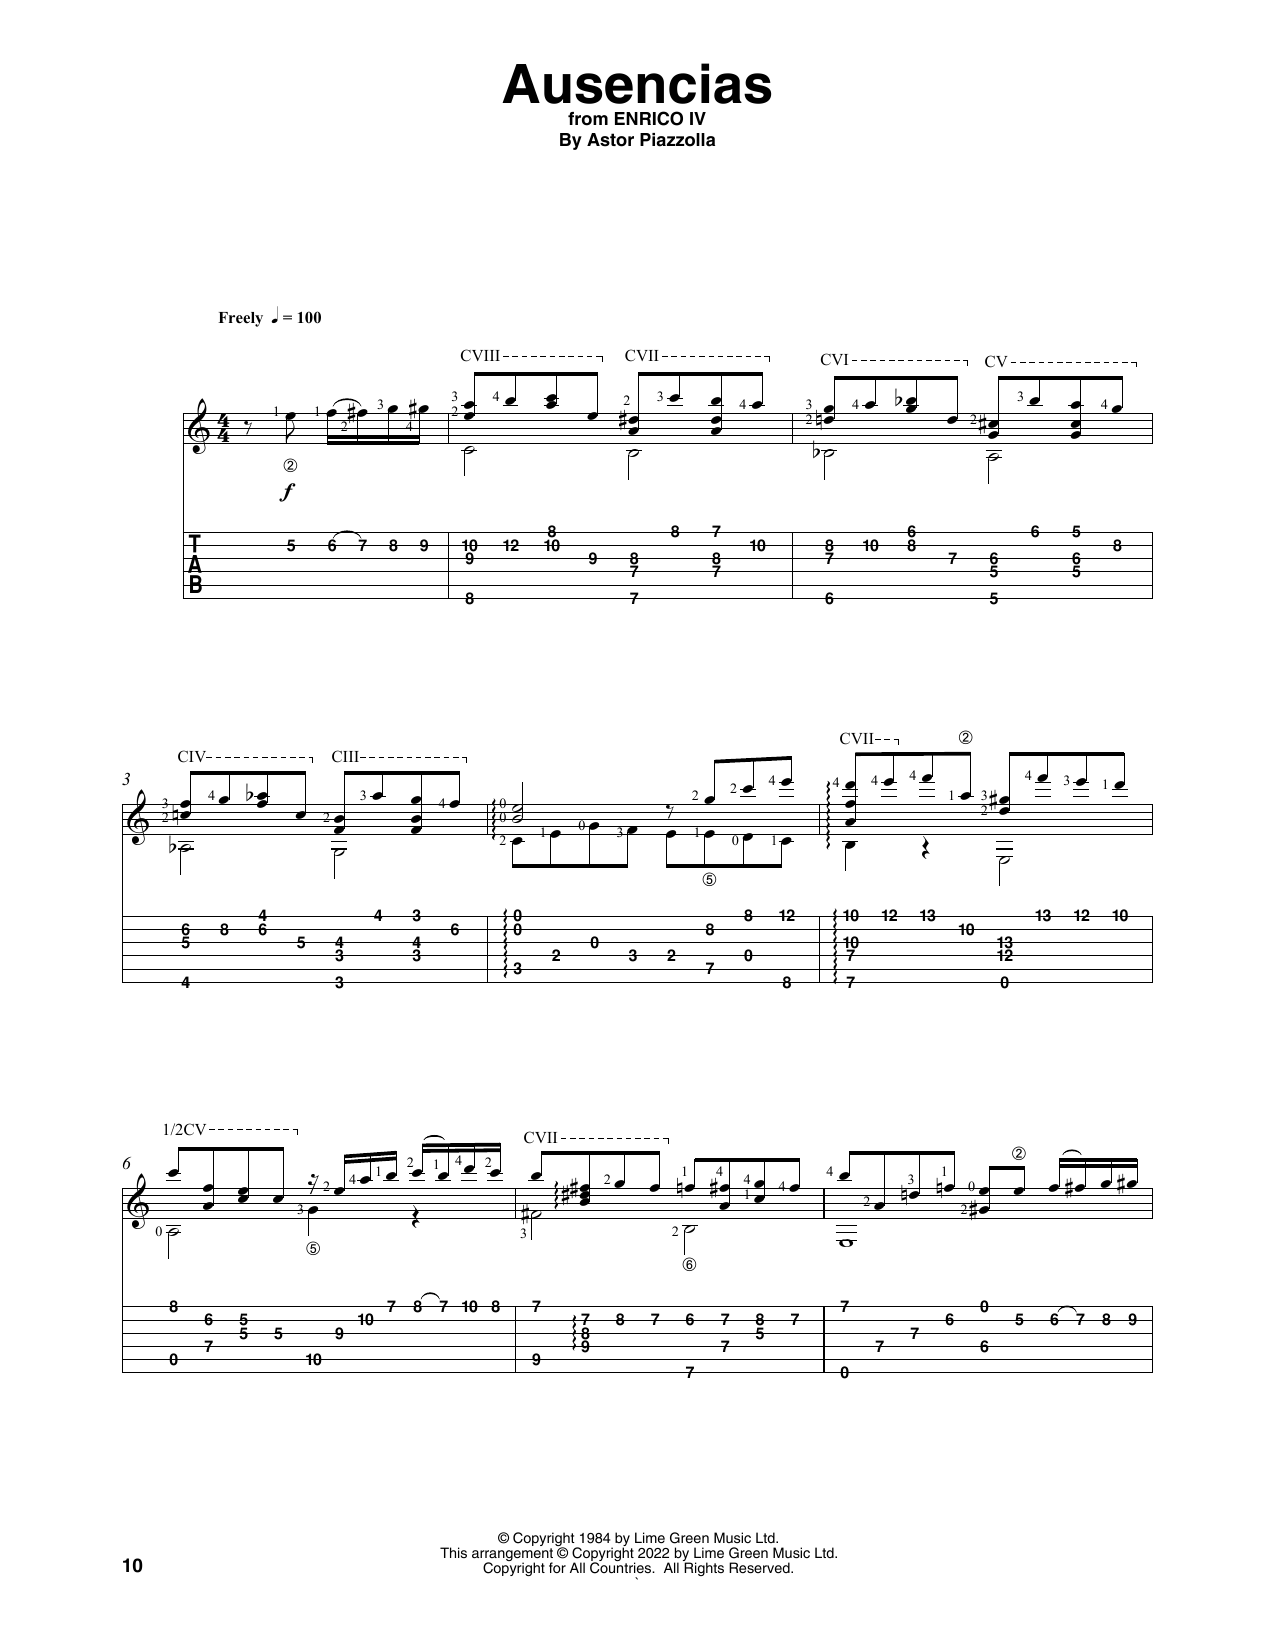 Astor Piazzolla Ausencias (arr. Celil Refik Kaya) Sheet Music Notes & Chords for Solo Guitar - Download or Print PDF